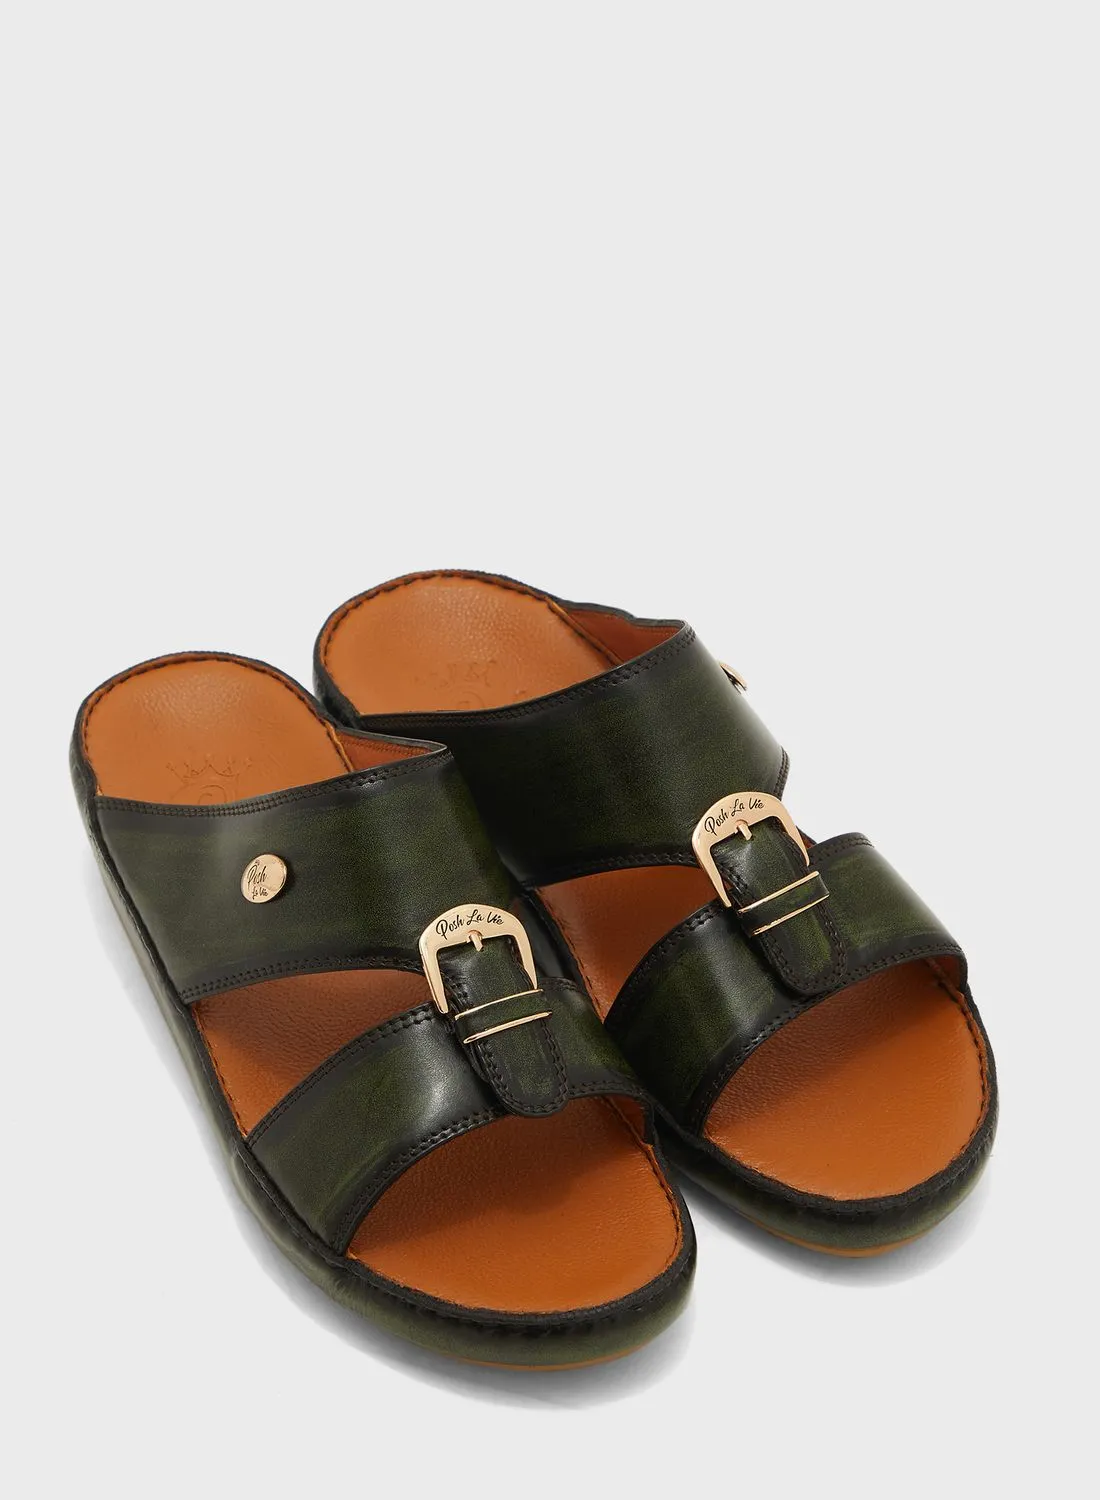 Posh La Vie Trendy Arabic Sandals